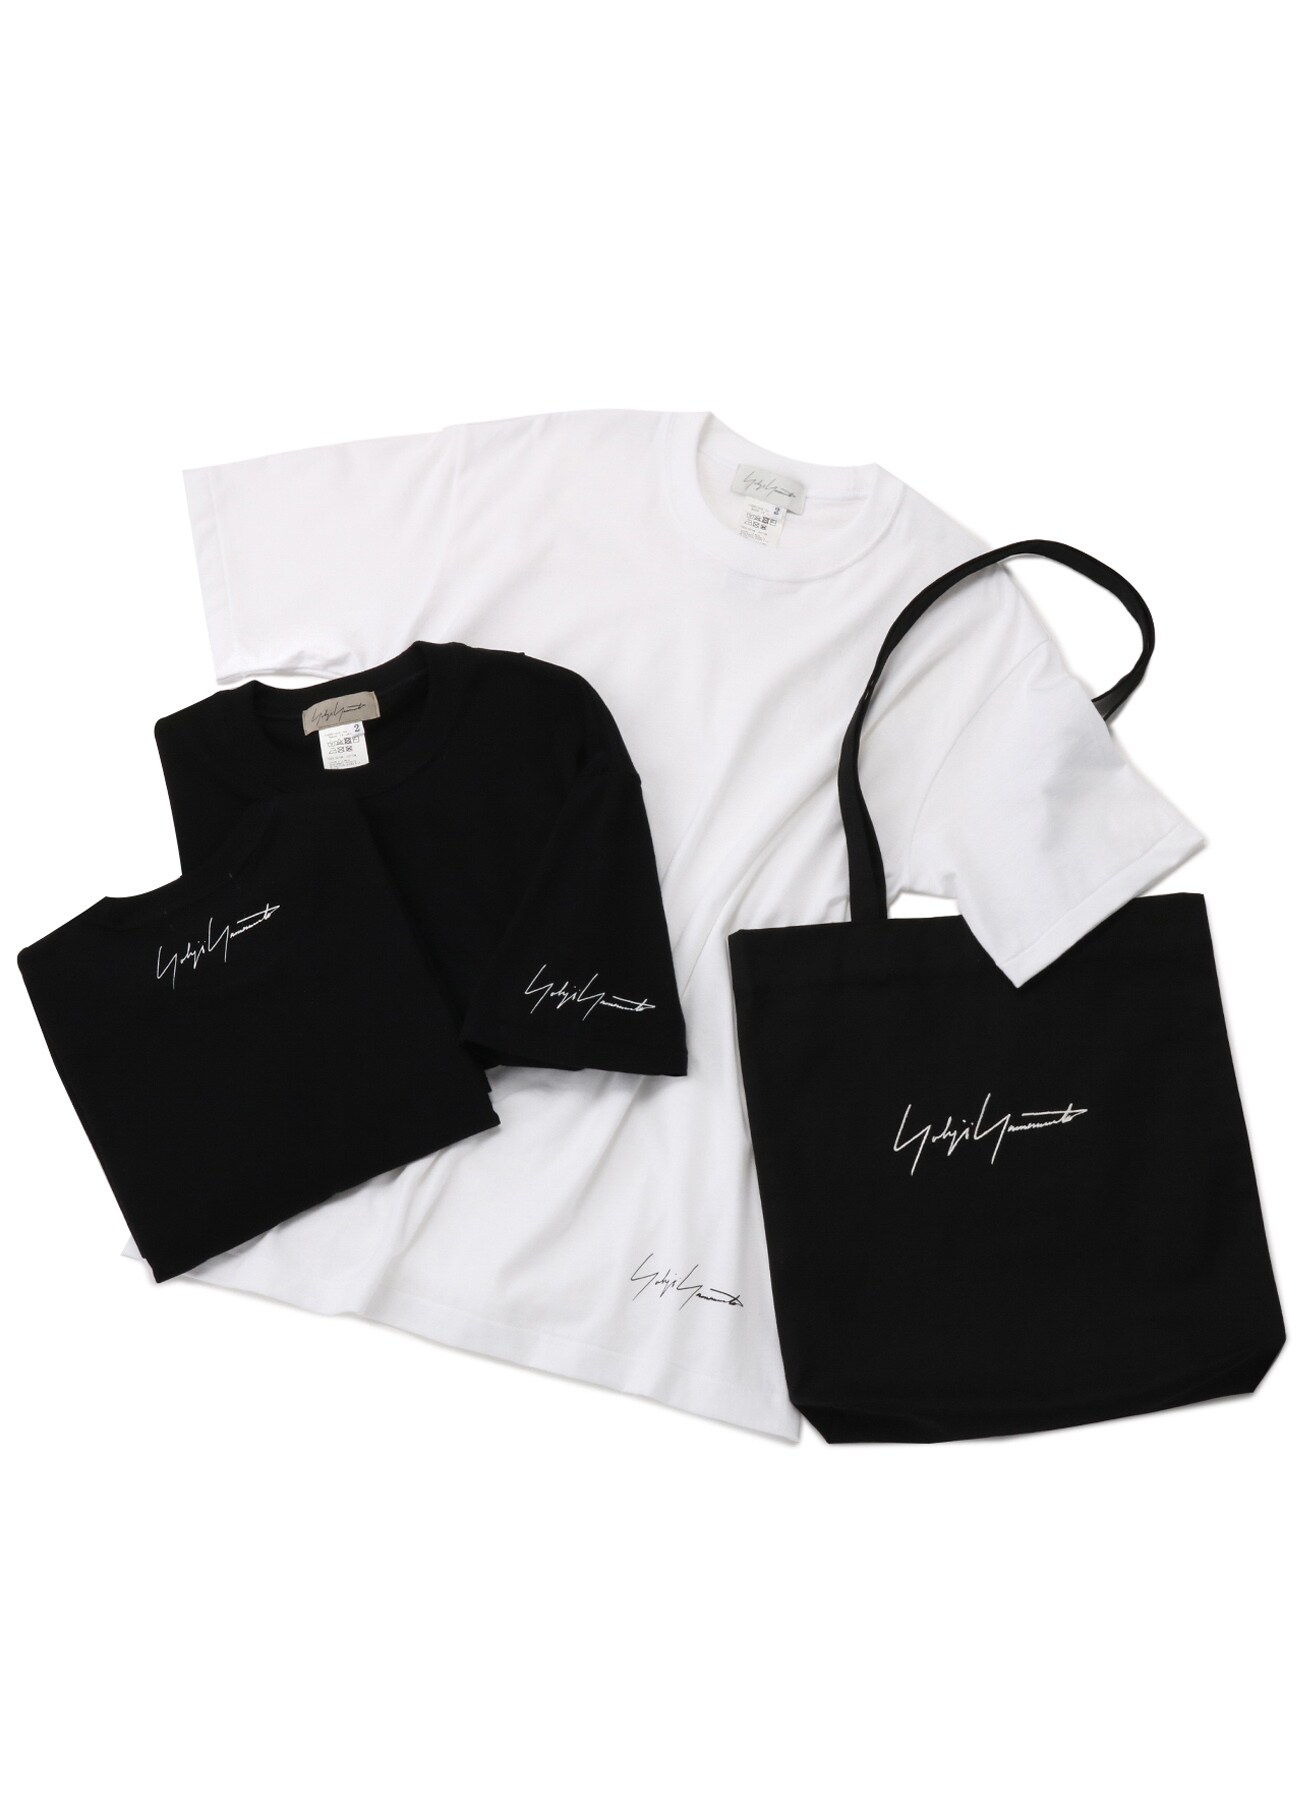 3 PACK T-shirt (S White x Black x Black): Yohji Yamamoto｜ THE 